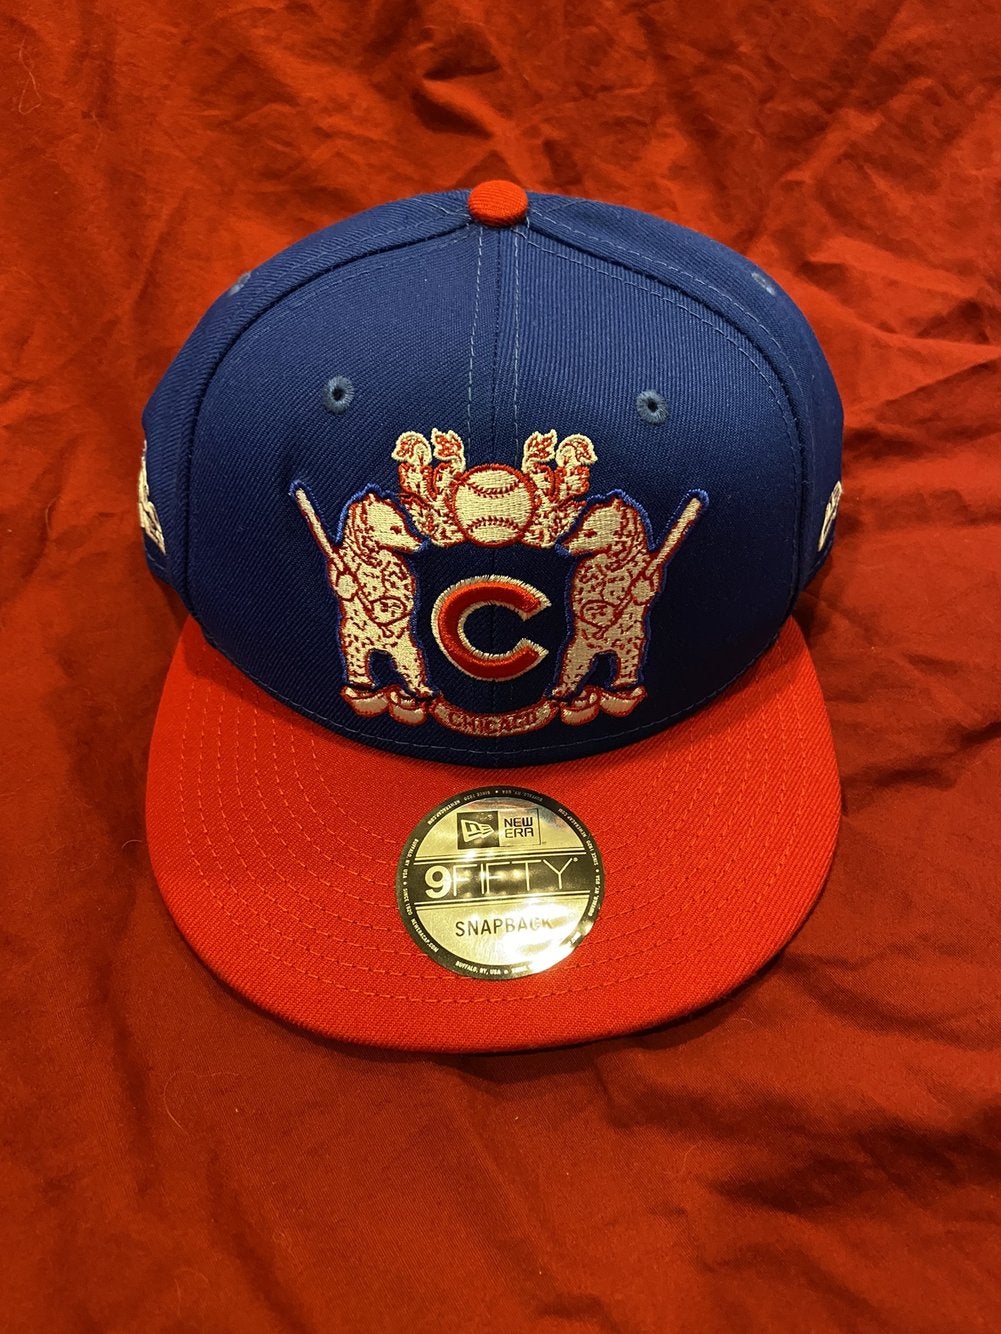 Chicago Cubs London Series Home Authentic 5950 Cap